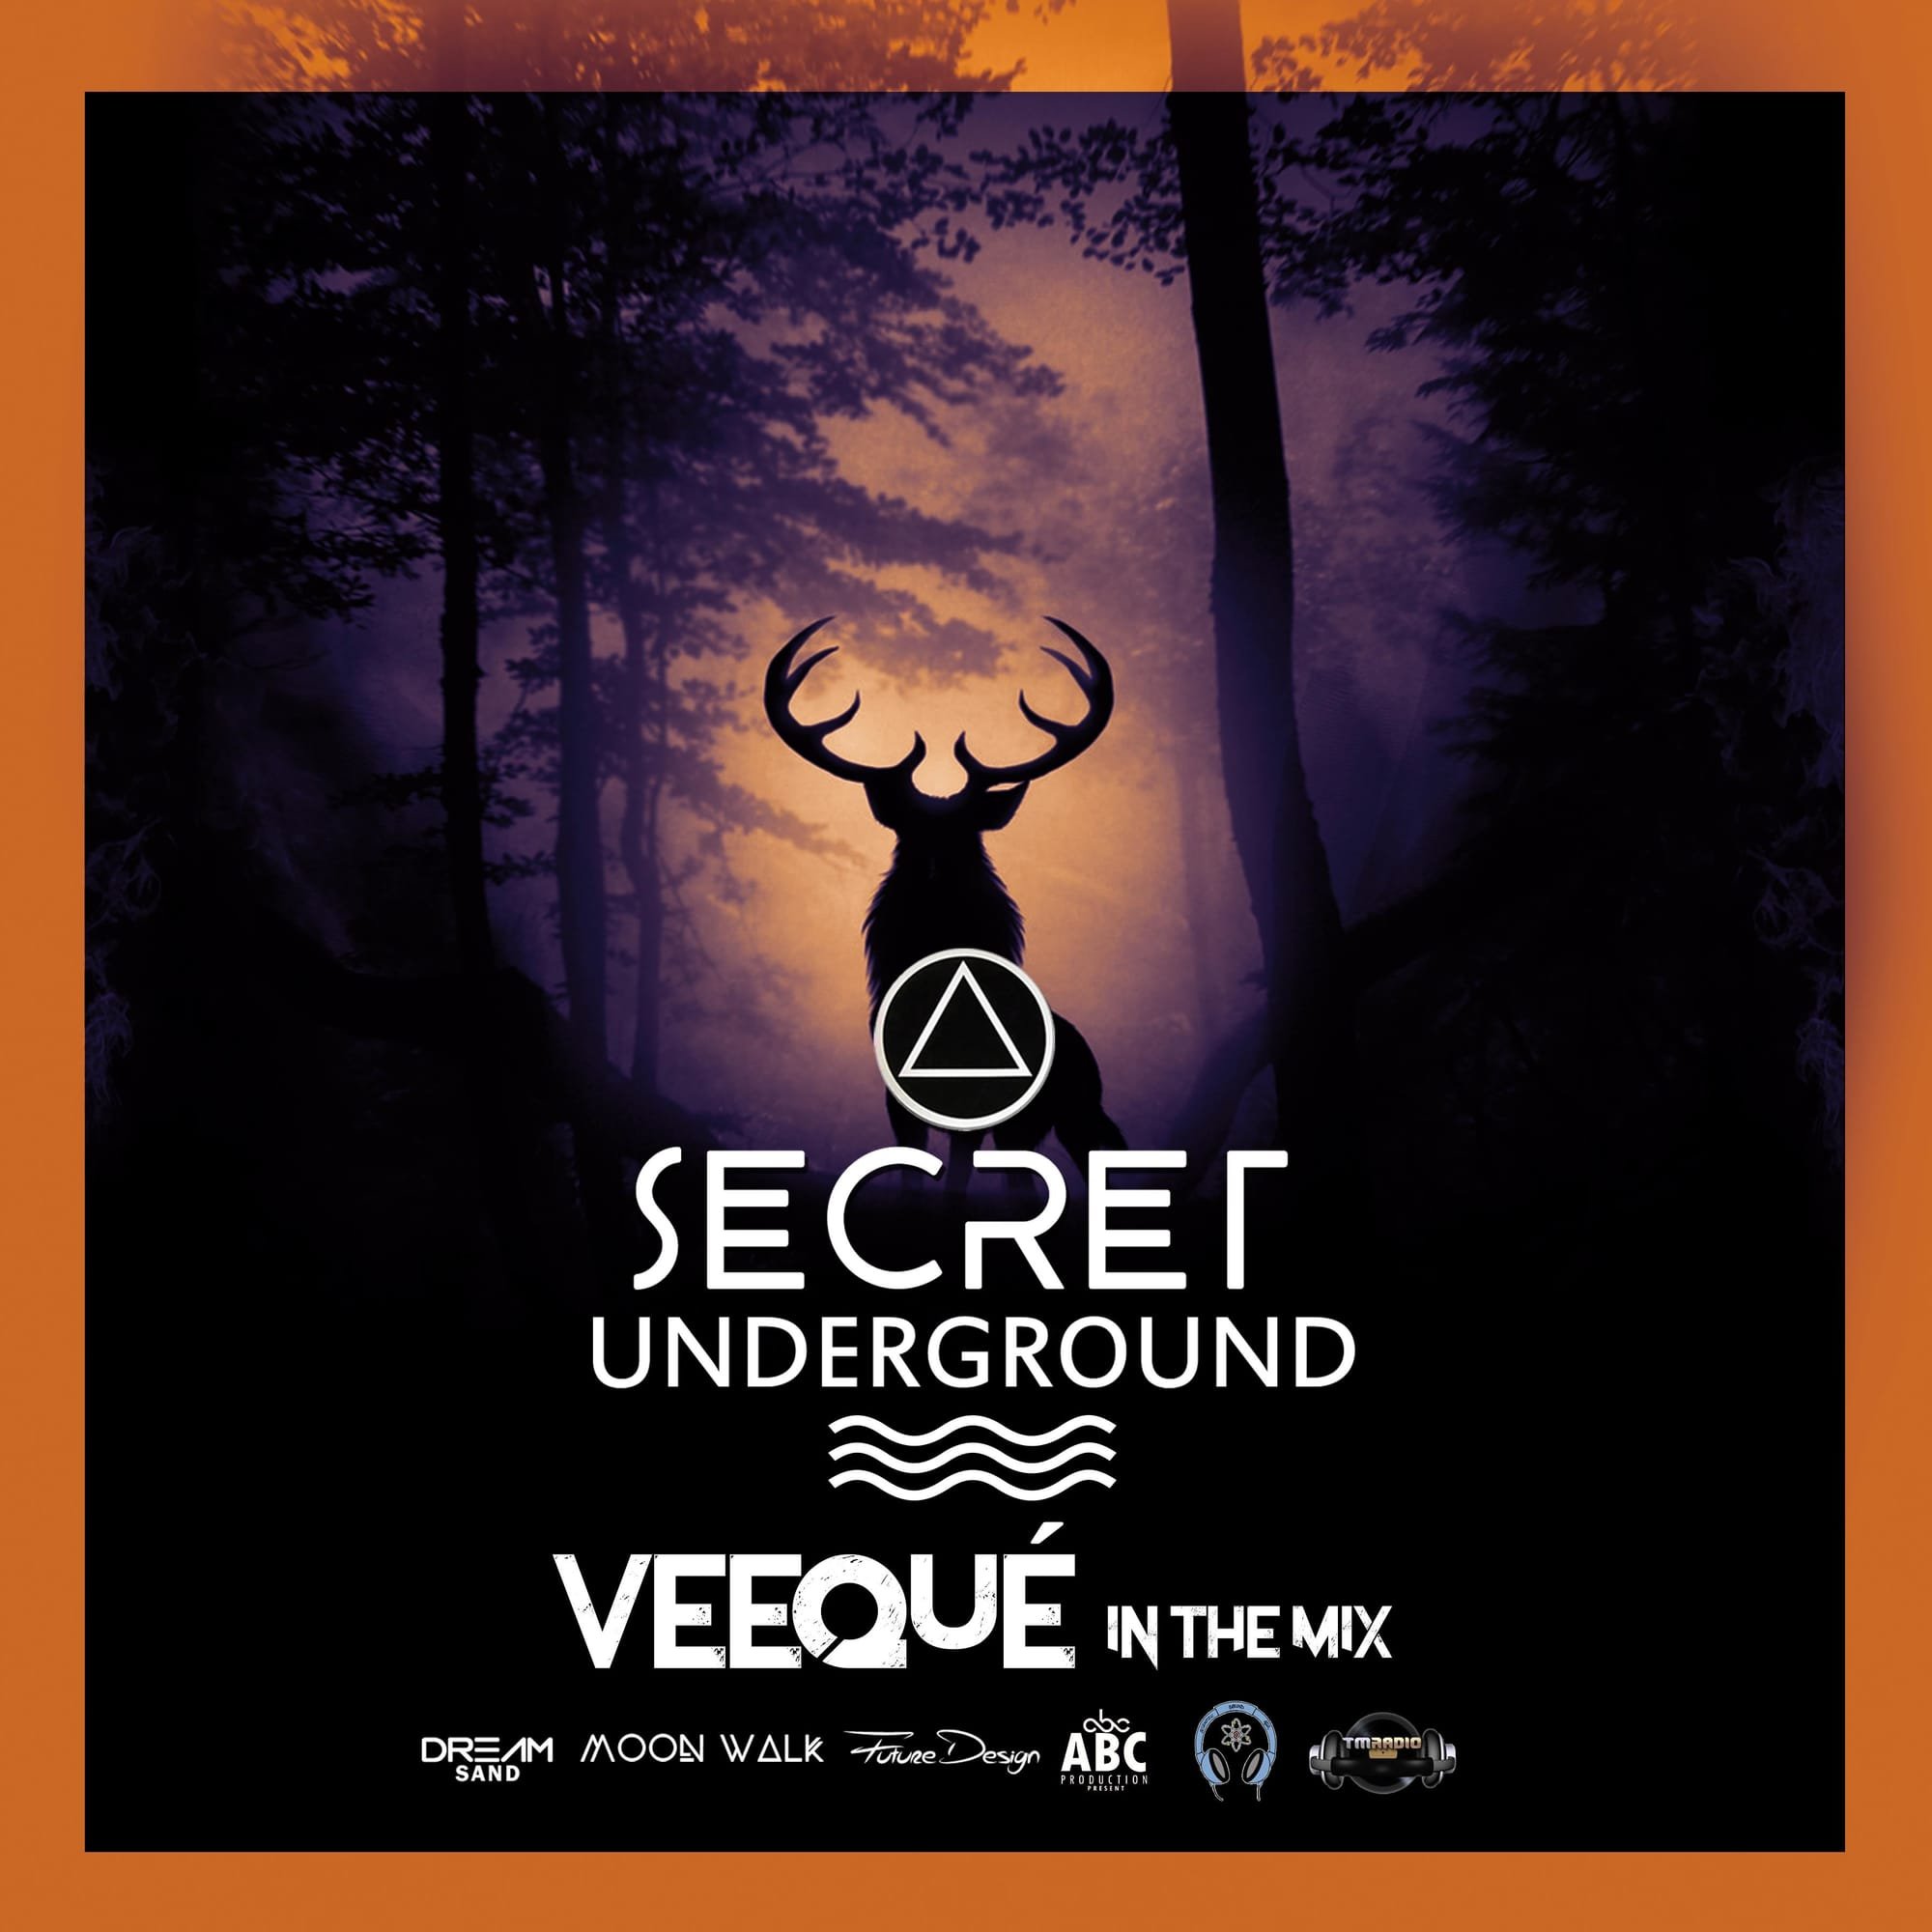 Secret Underground 07 featuring VeeQué uploaded to Mixcloud.